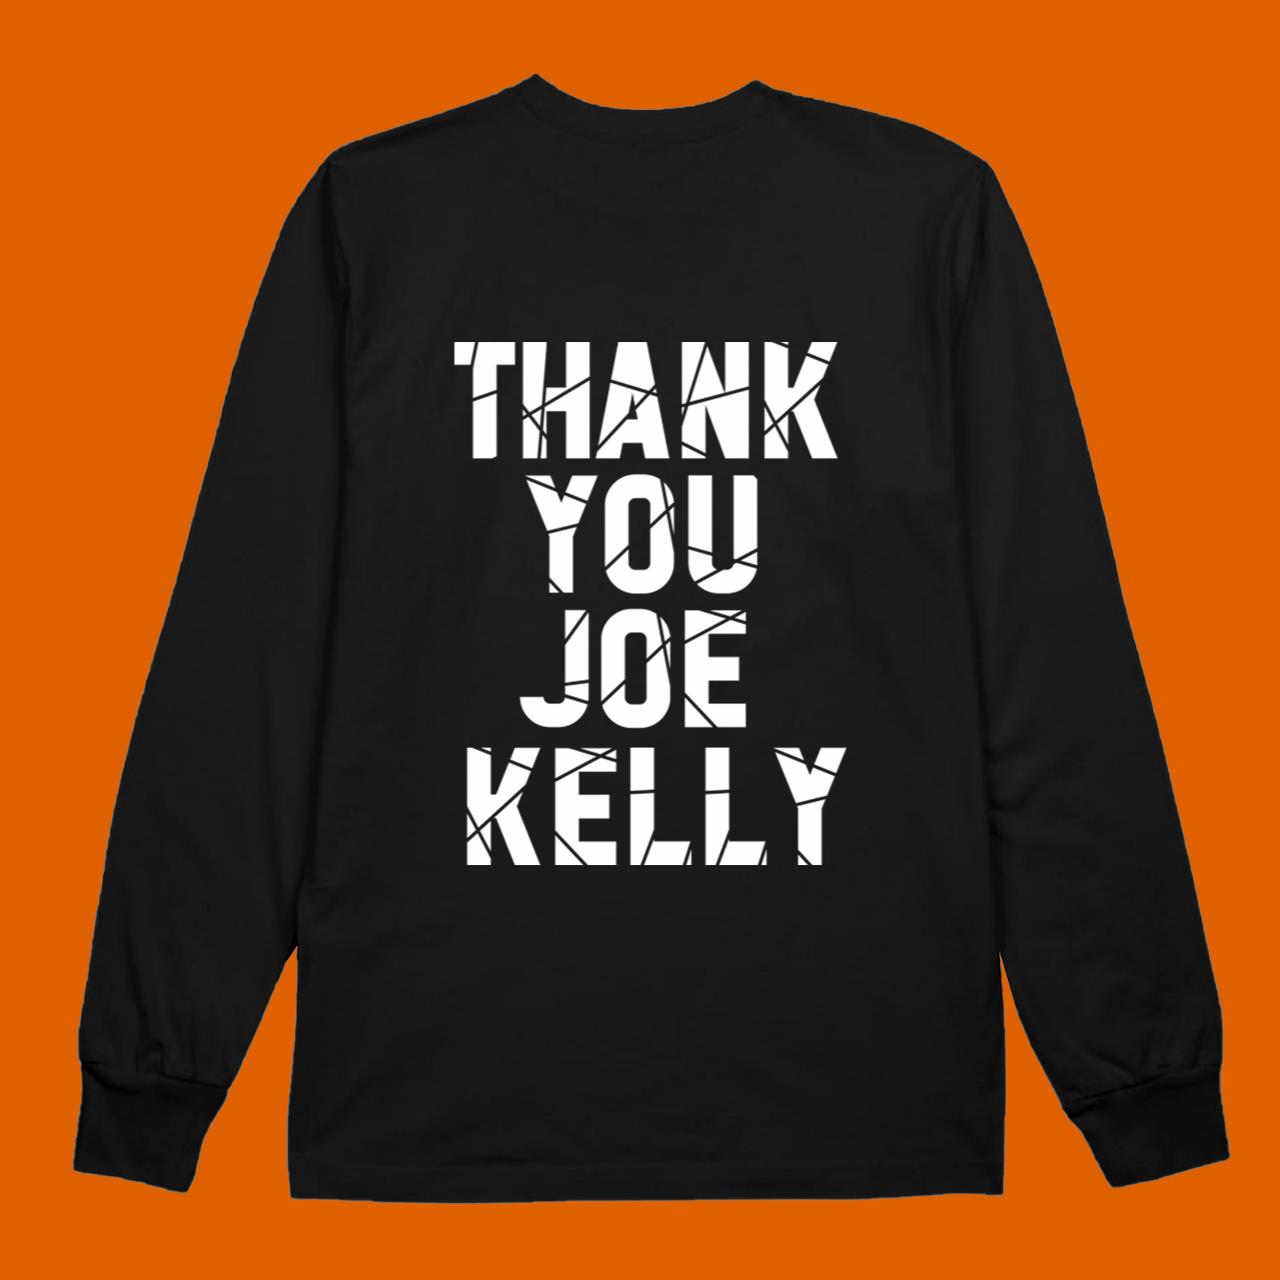 Thank You Joe Kelly T-Shirt